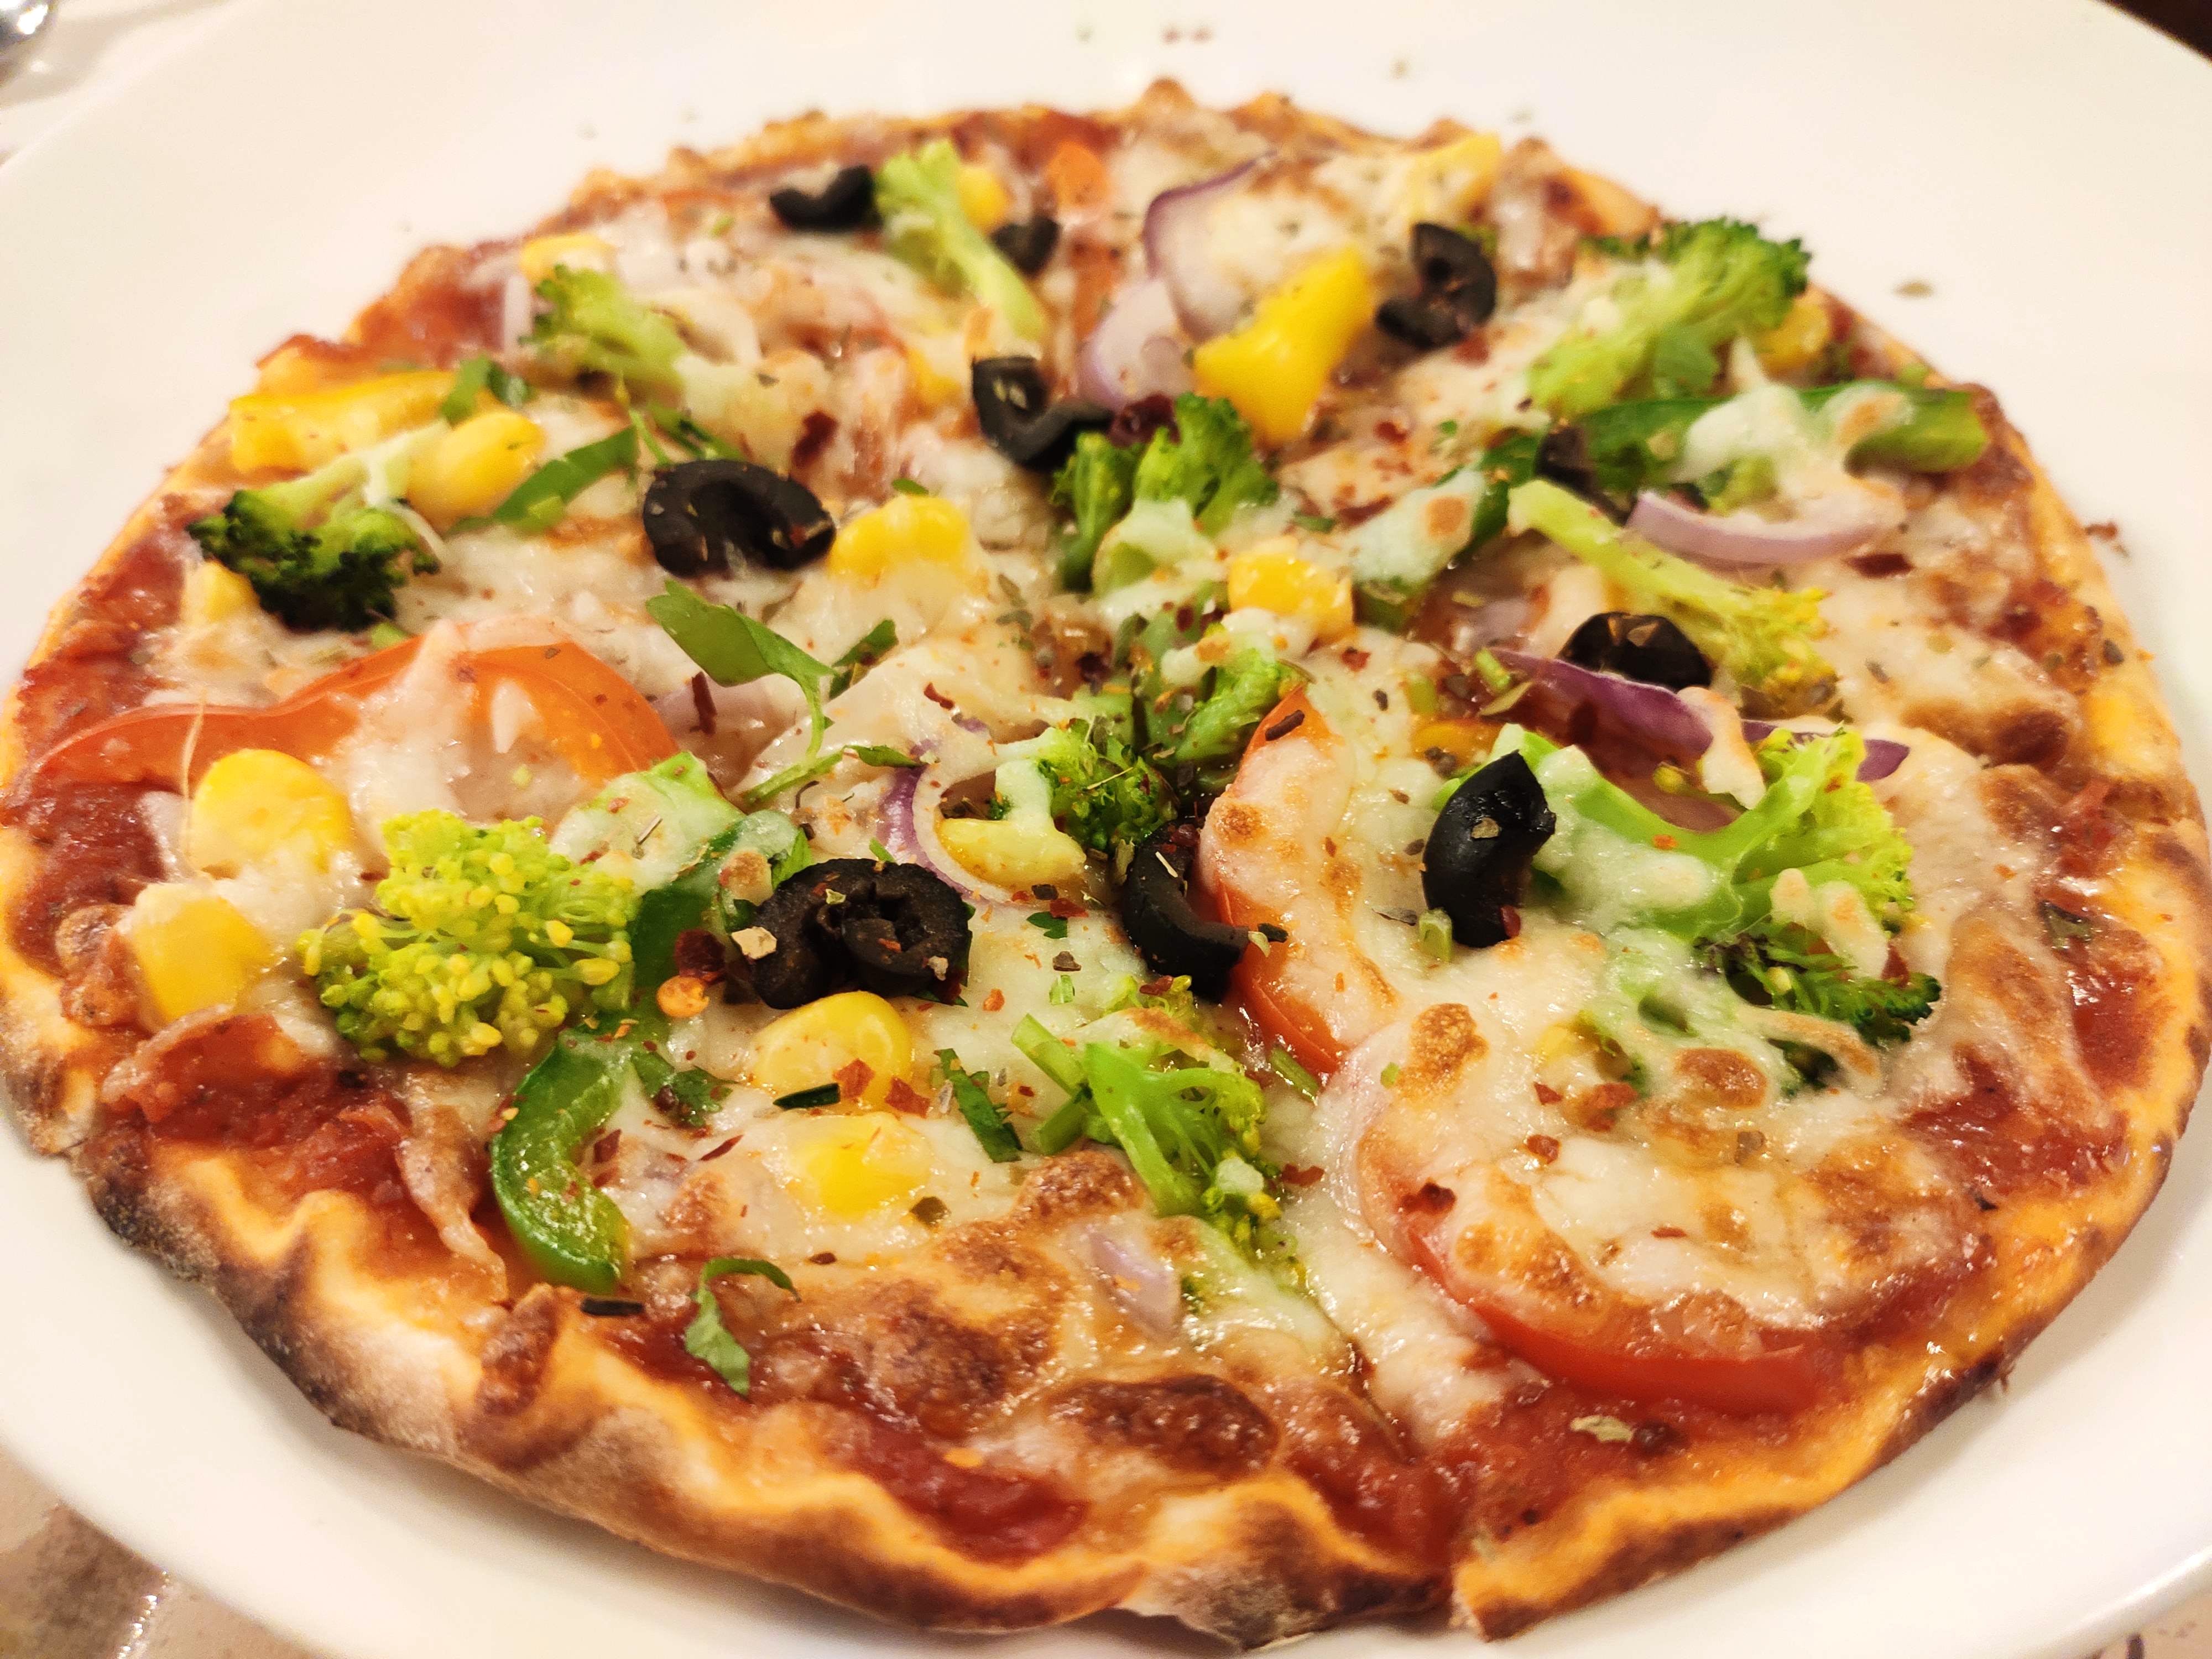 Dish,Food,Pizza,Cuisine,California-style pizza,Flatbread,Ingredient,Pizza cheese,Italian food,Comfort food